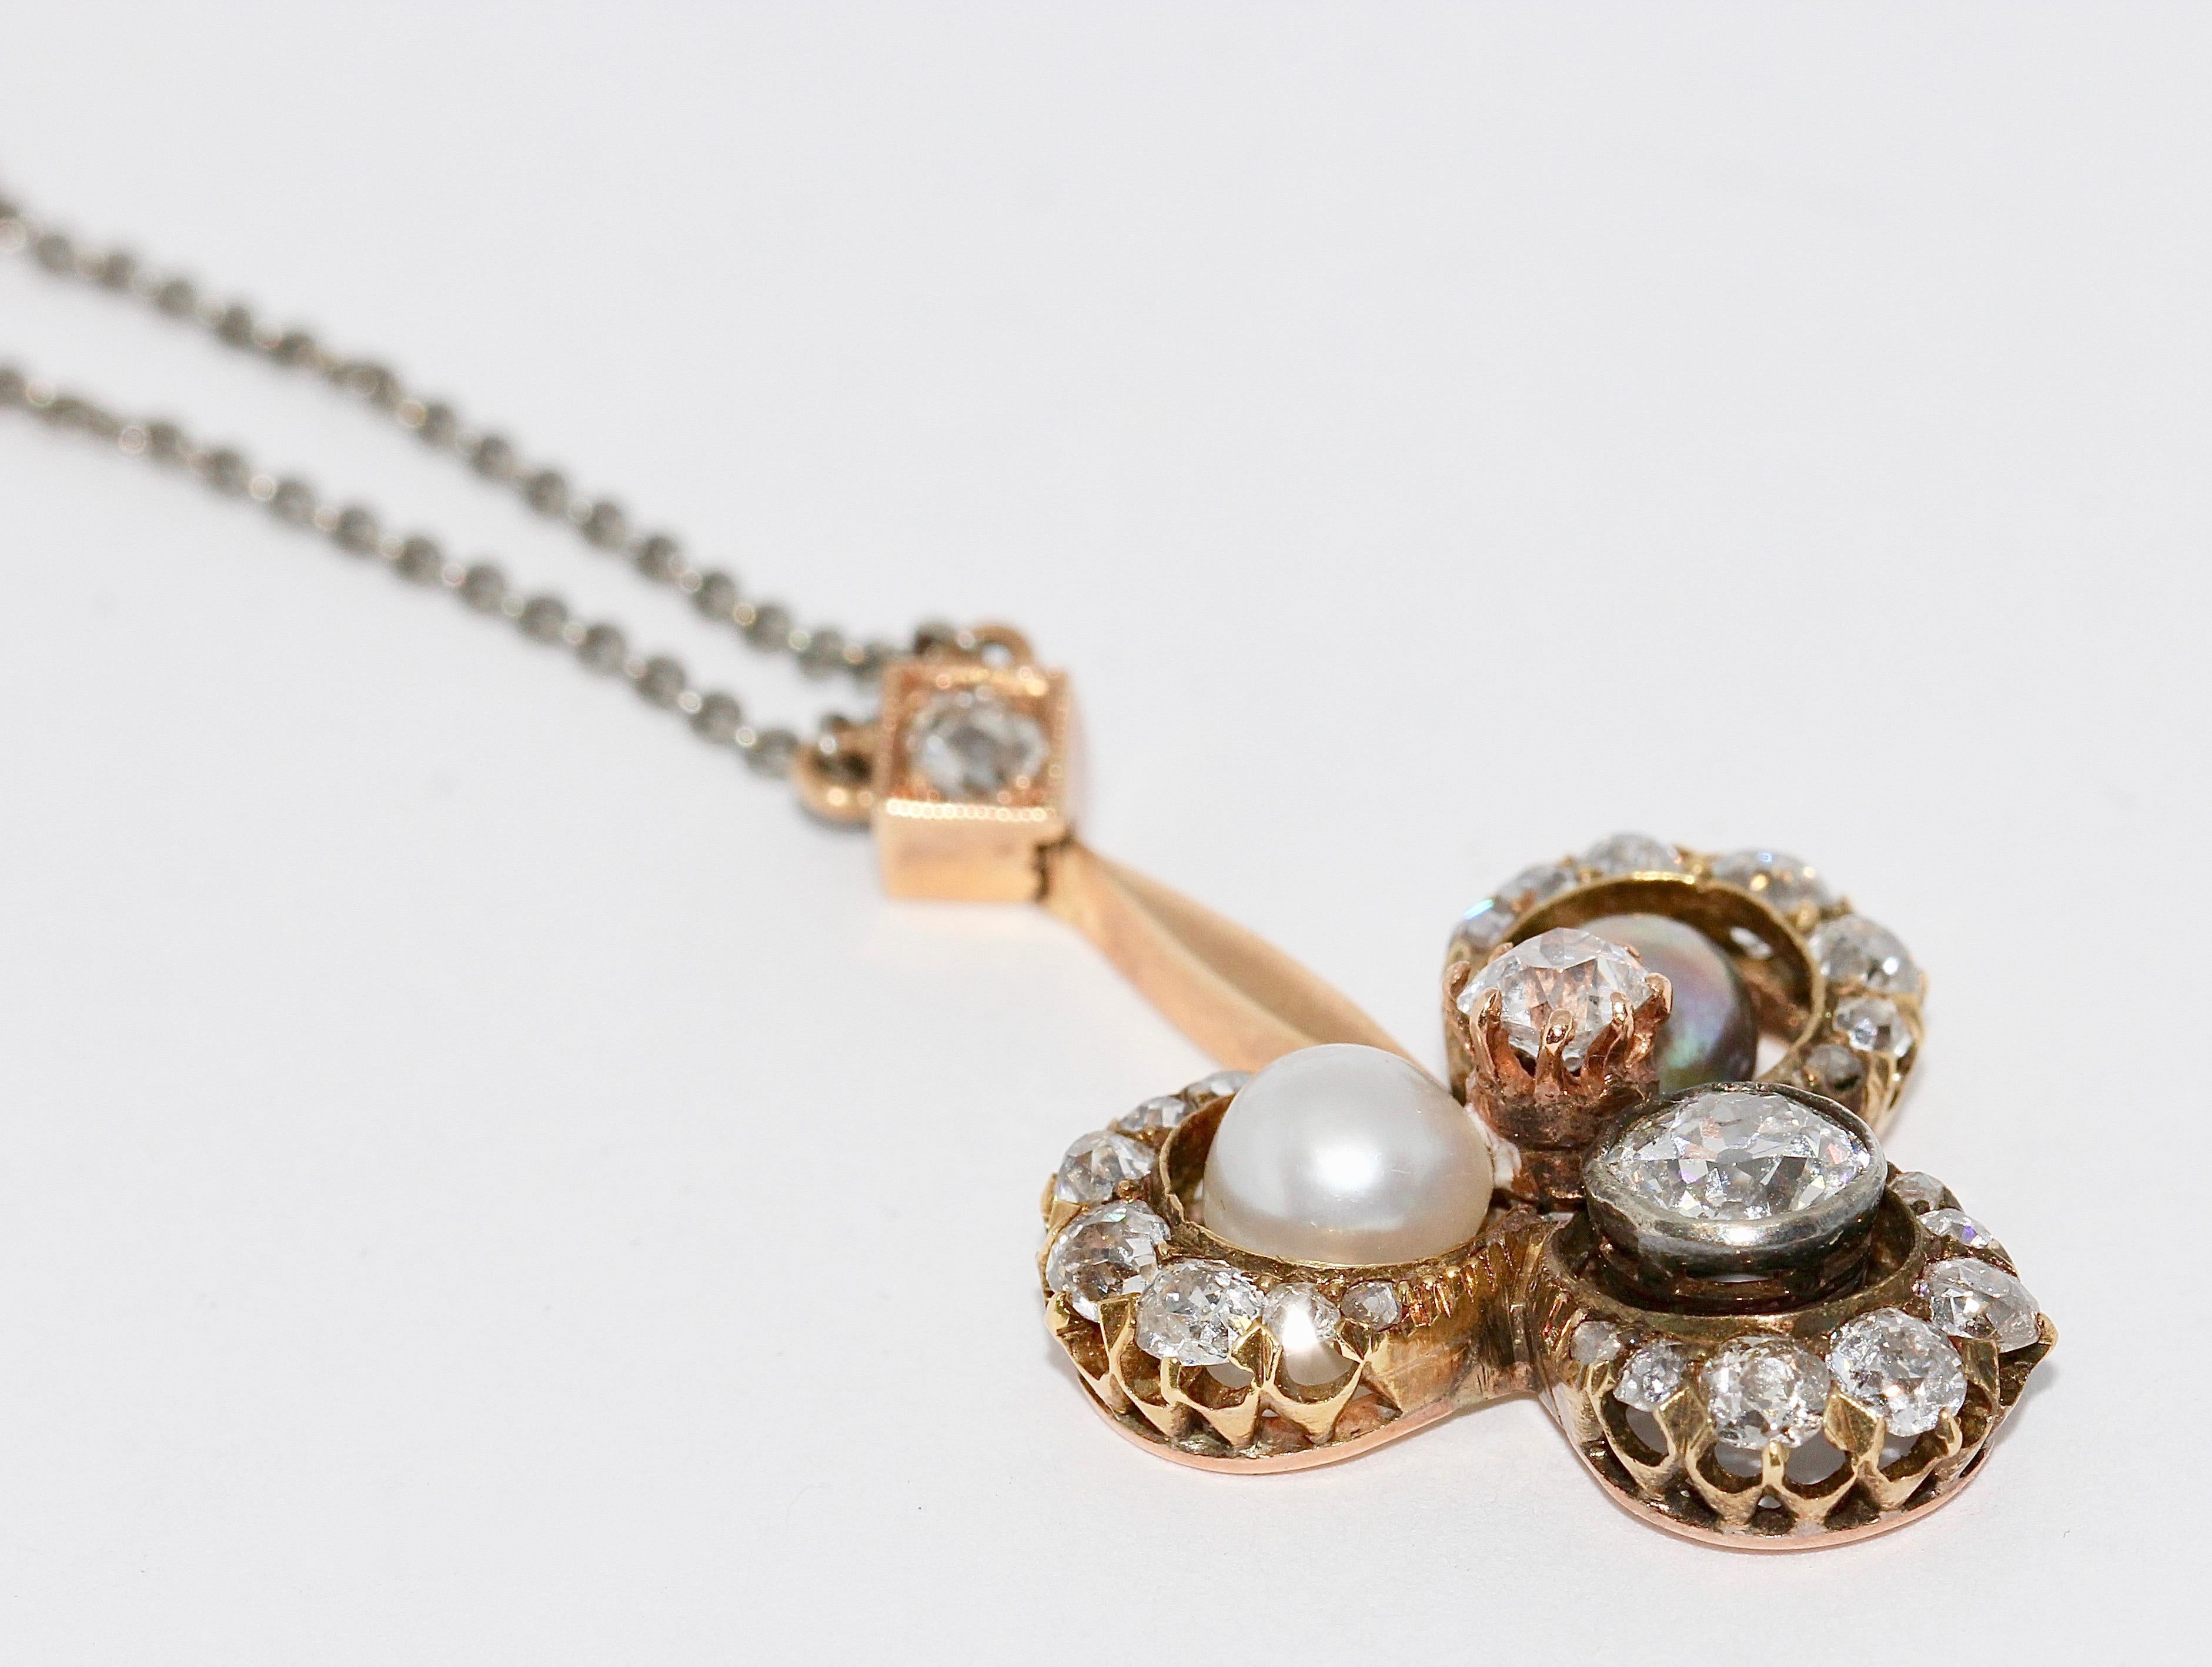 Women's Antique Art Nouveau Gold Necklace, Pendant, with Diamonds and Natural Pearls For Sale